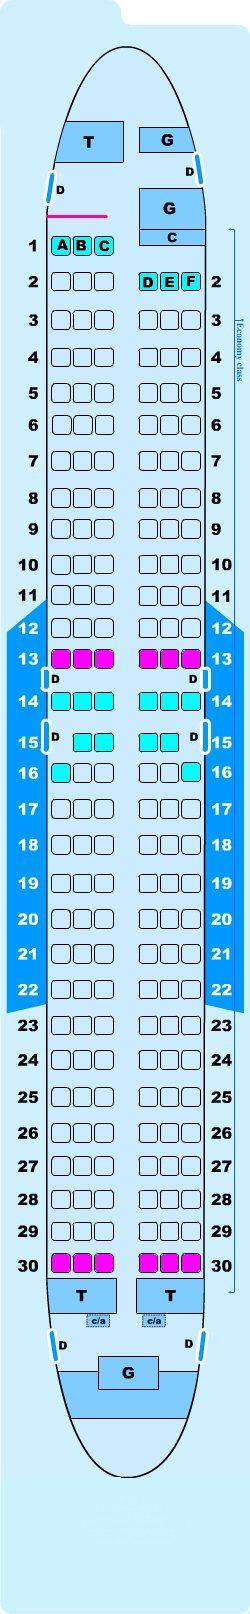 seat map boeing 737 800